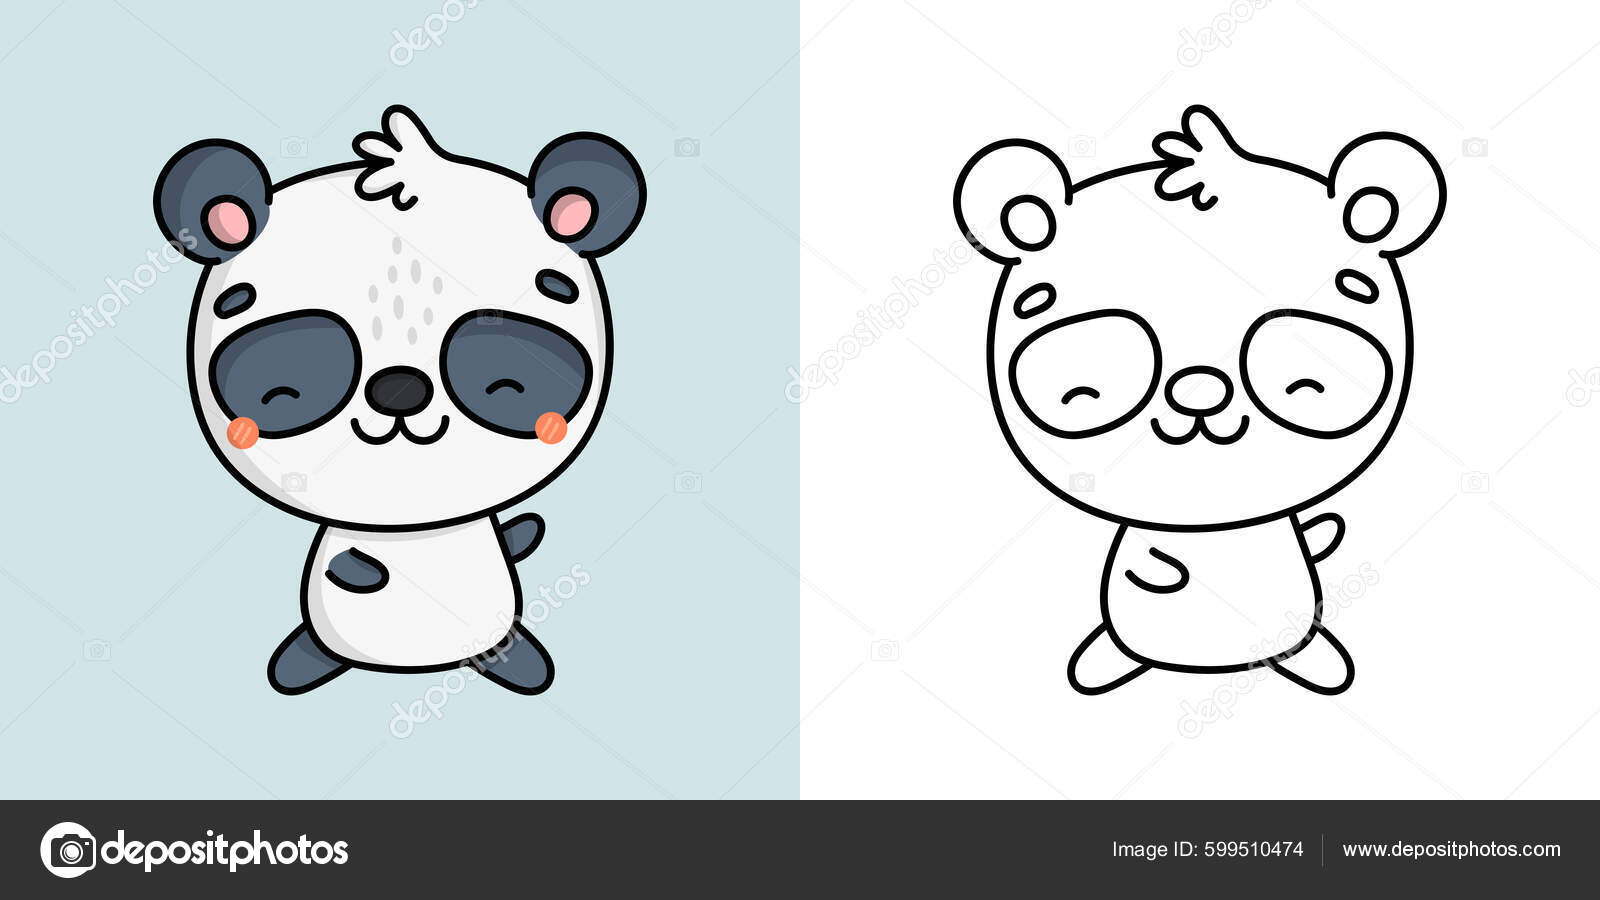 15,236 Panda Sketch Images, Stock Photos, 3D objects, & Vectors |  Shutterstock